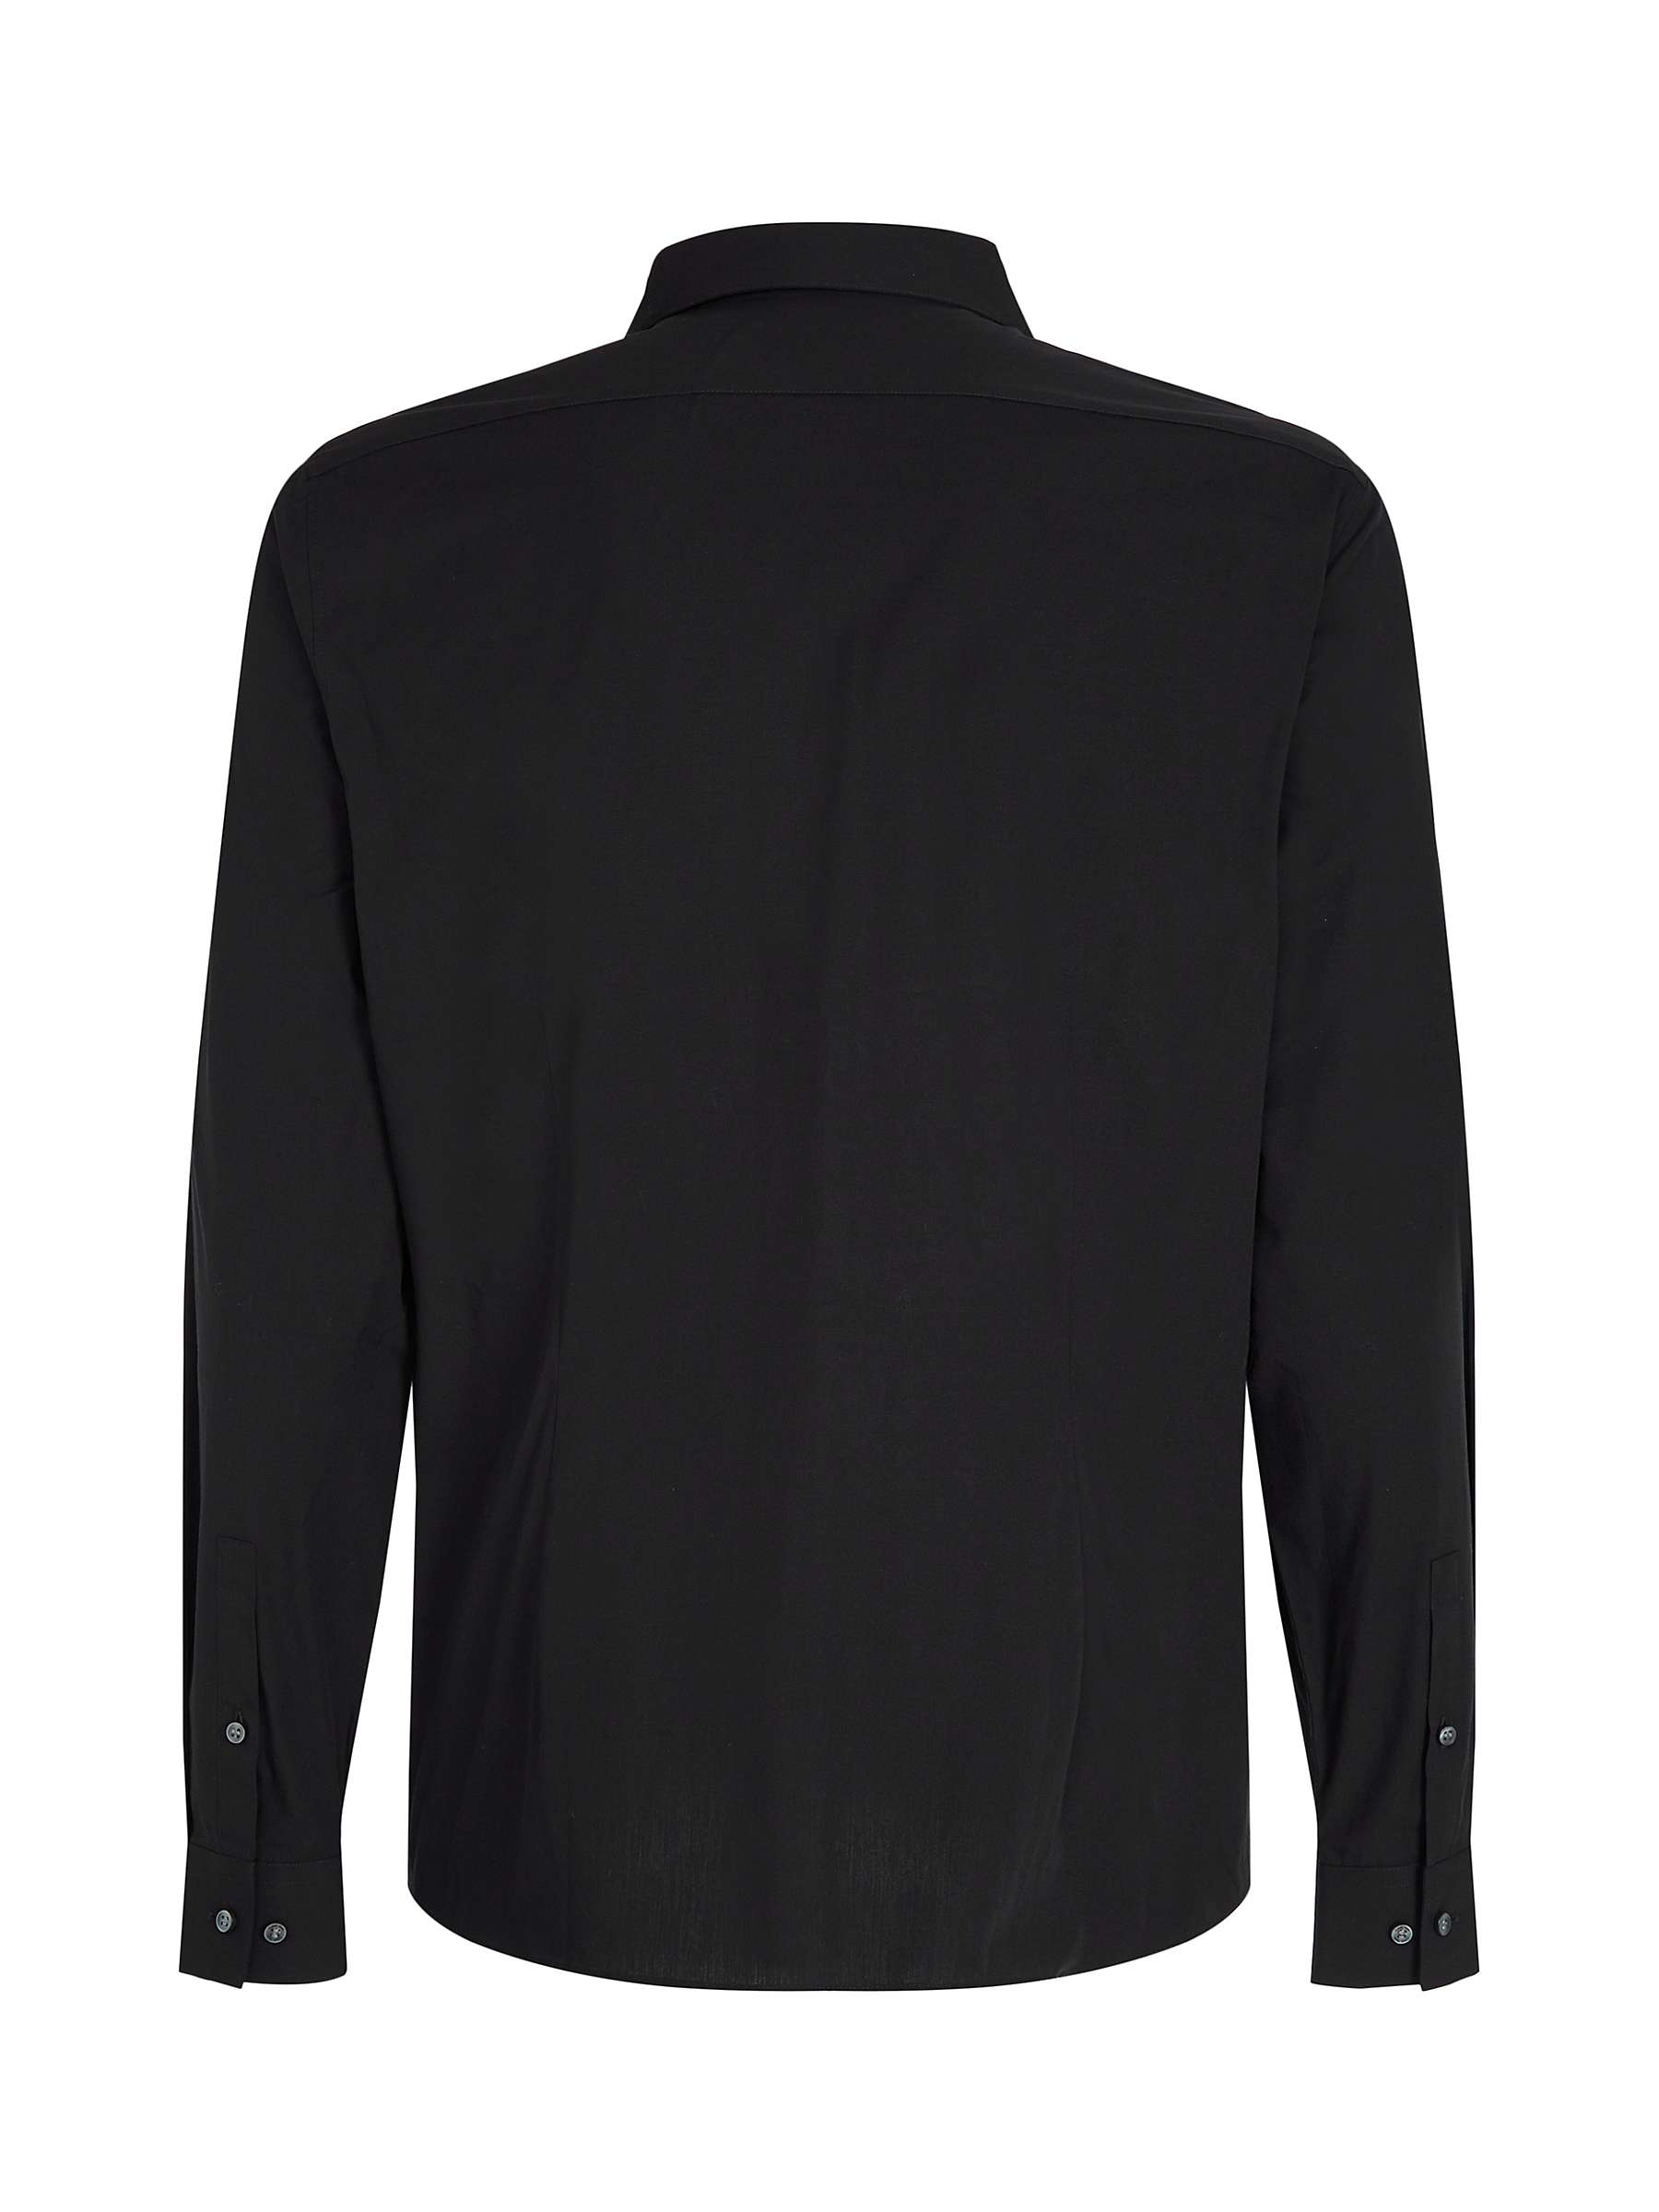 Calvin Klein Cotton Poplin Slim Fit Shirt, Black at John Lewis & Partners